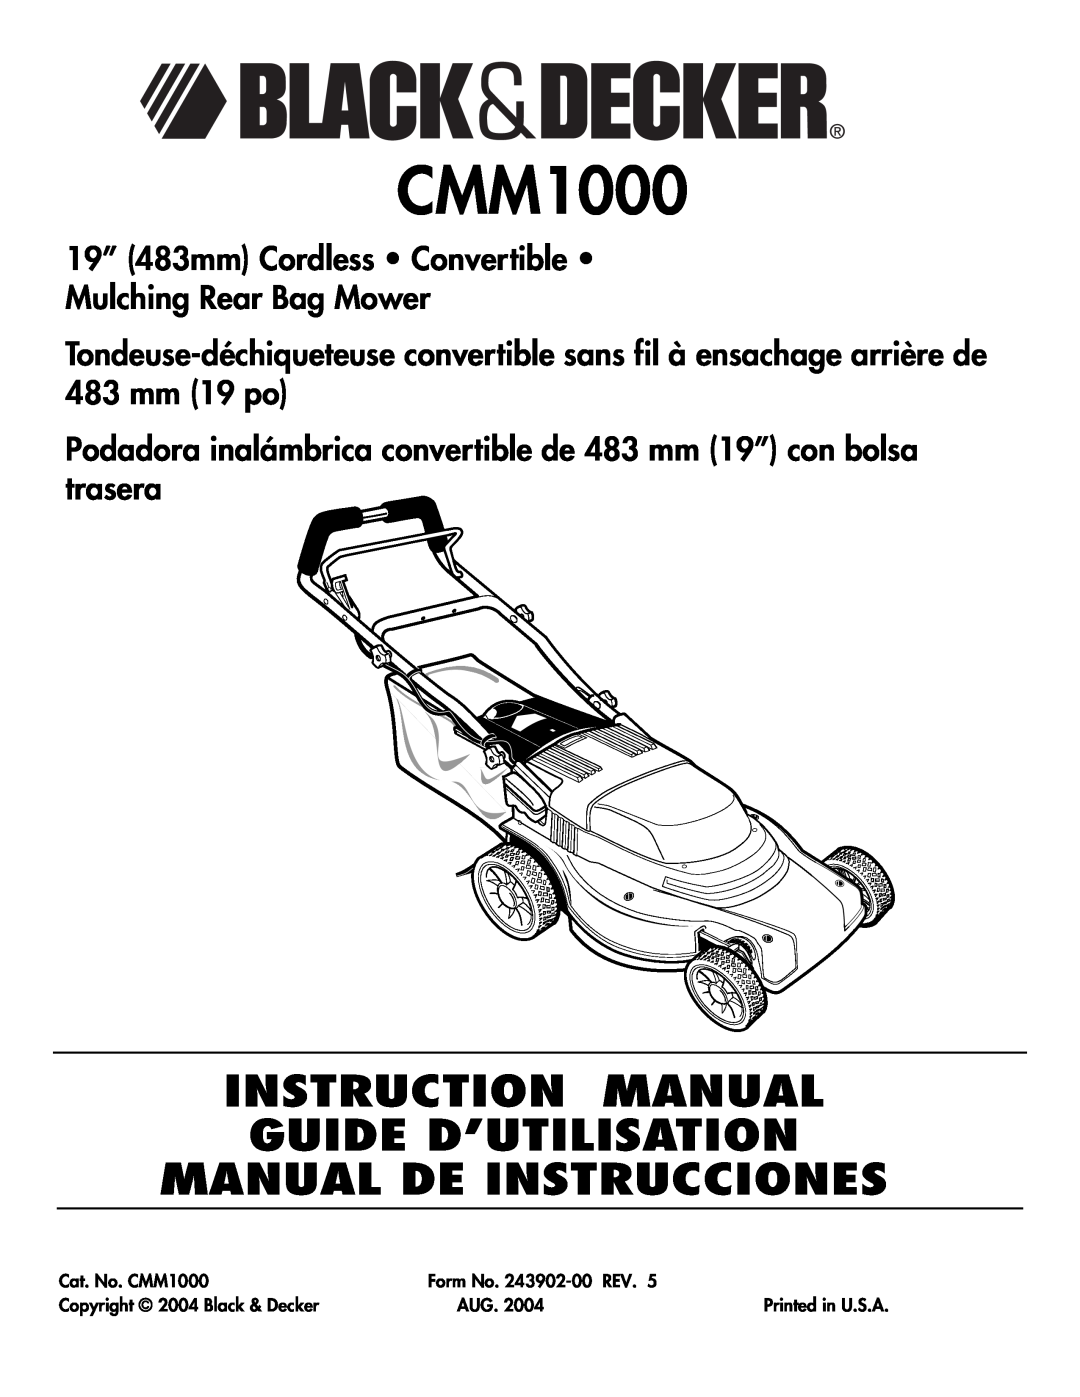 Black & Decker instruction manual Cat. No. CMM1000, Form No. 243902-00 REV, Copyright 2004 Black & Decker 